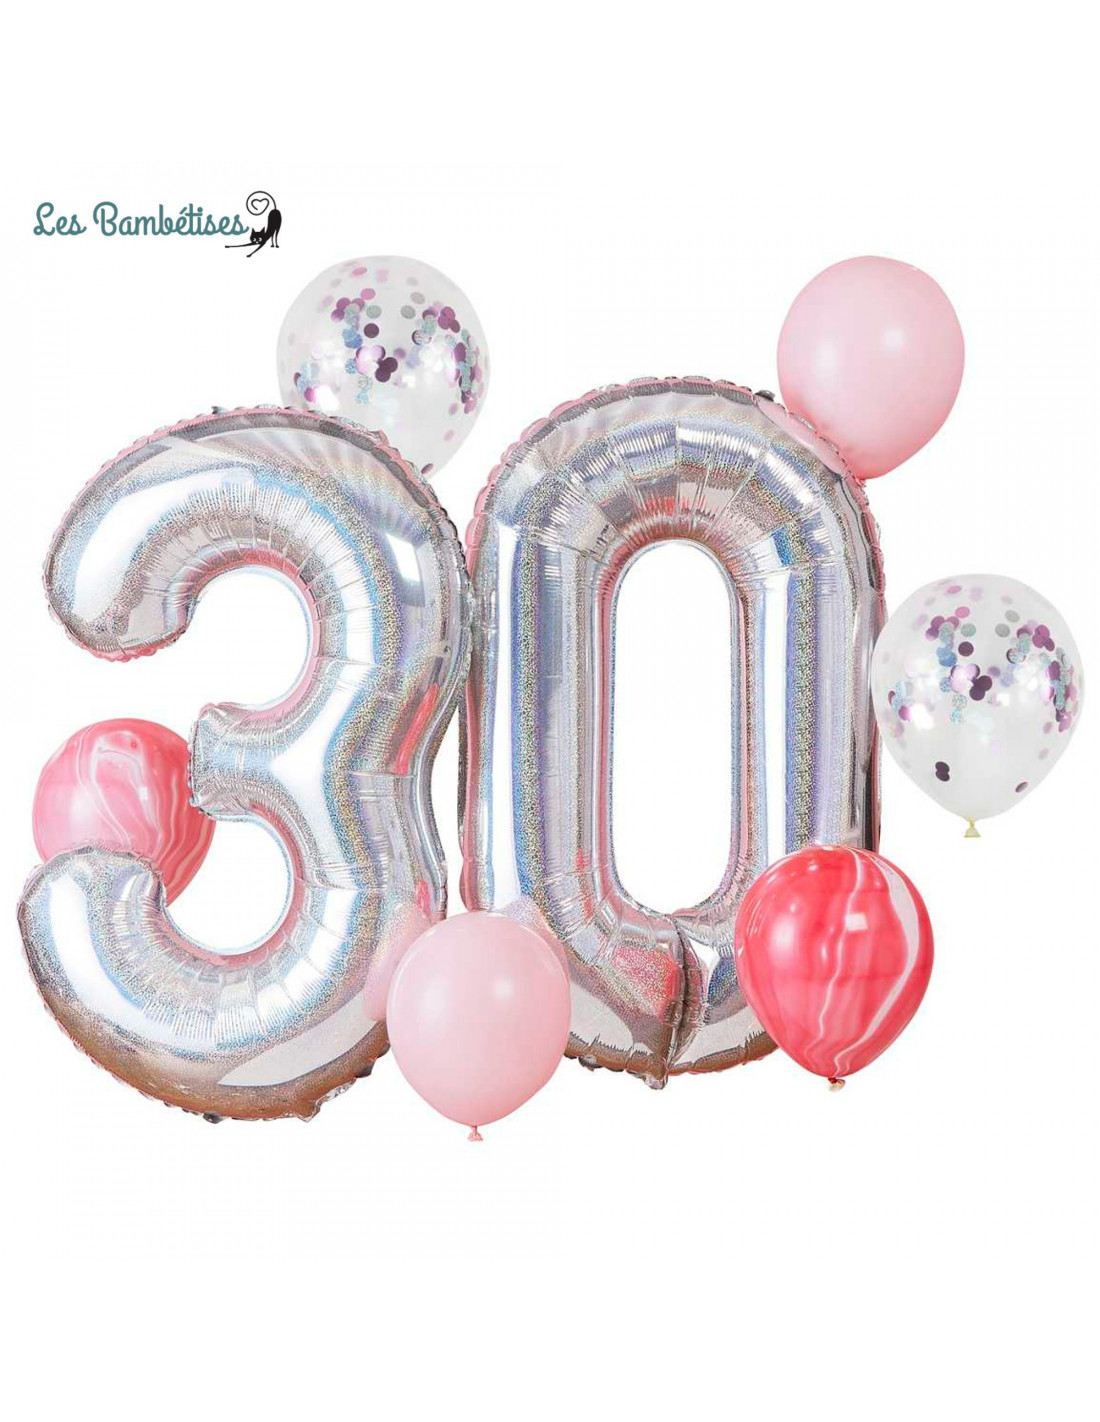 BALLON ANNIVERSAIRE 30 Ans Rose - 101 CM Ballon Chiffre + Happy